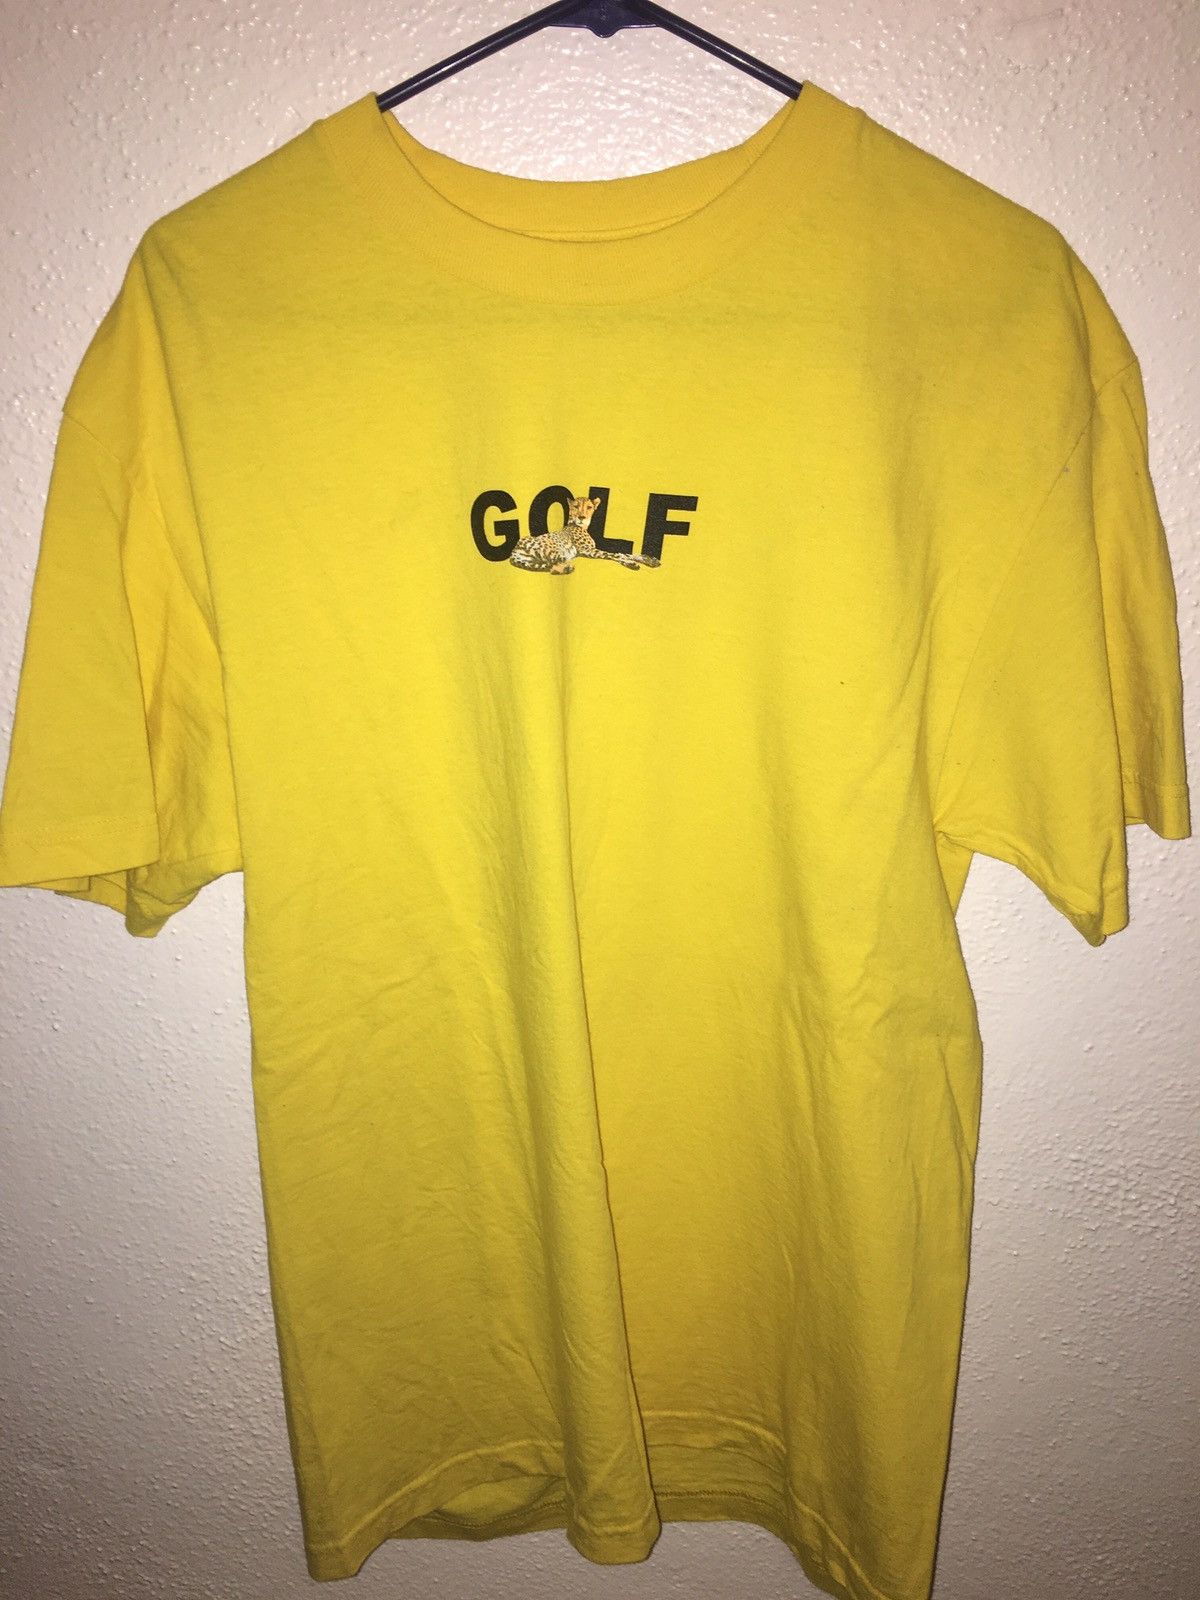 Golf Wang Golf Wang Cheetah Shirt Size US L / EU 52-54 / 3 - 1 Preview